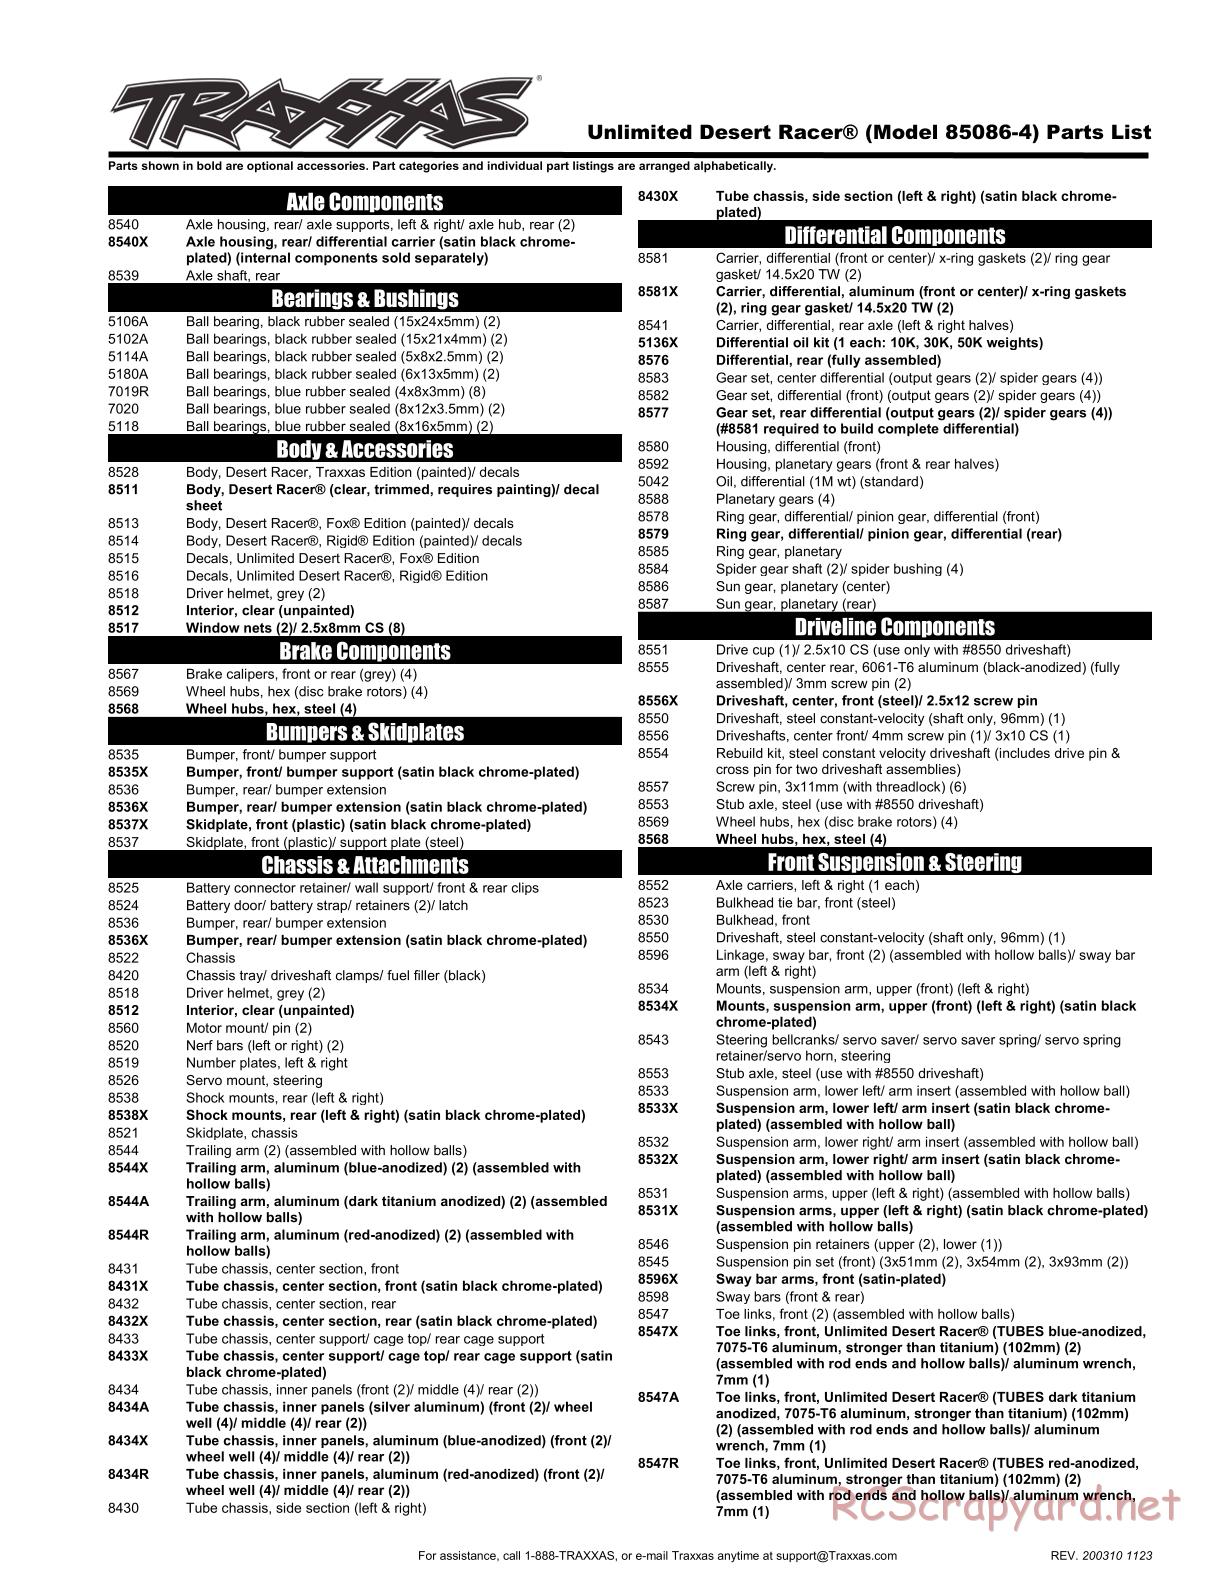 Traxxas - Unlimited Desert Racer VXL TSM - Parts List - Page 1